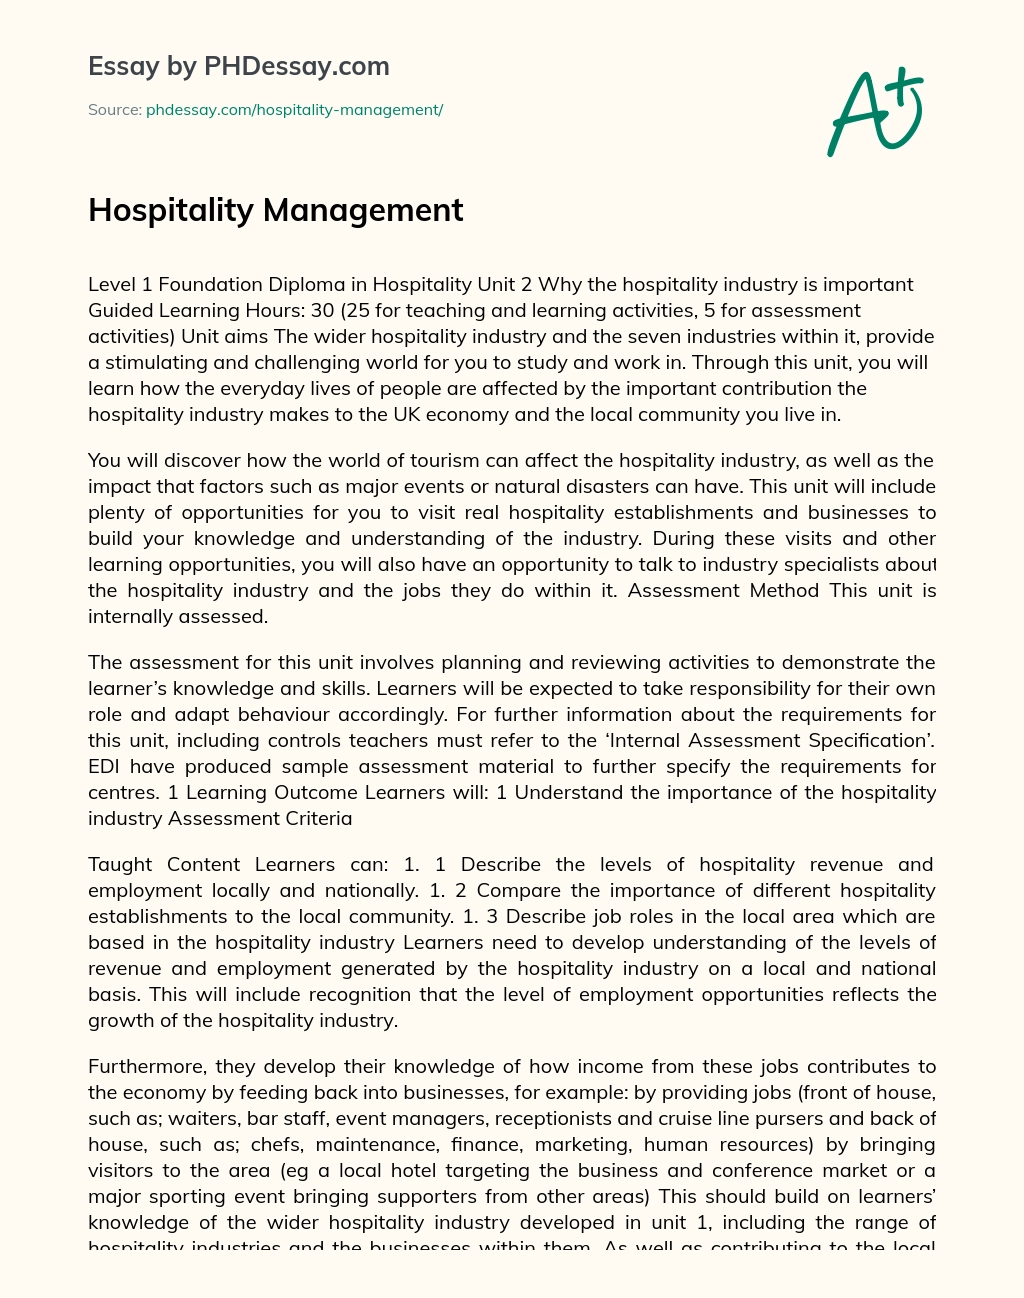 importance of hospitality management essay